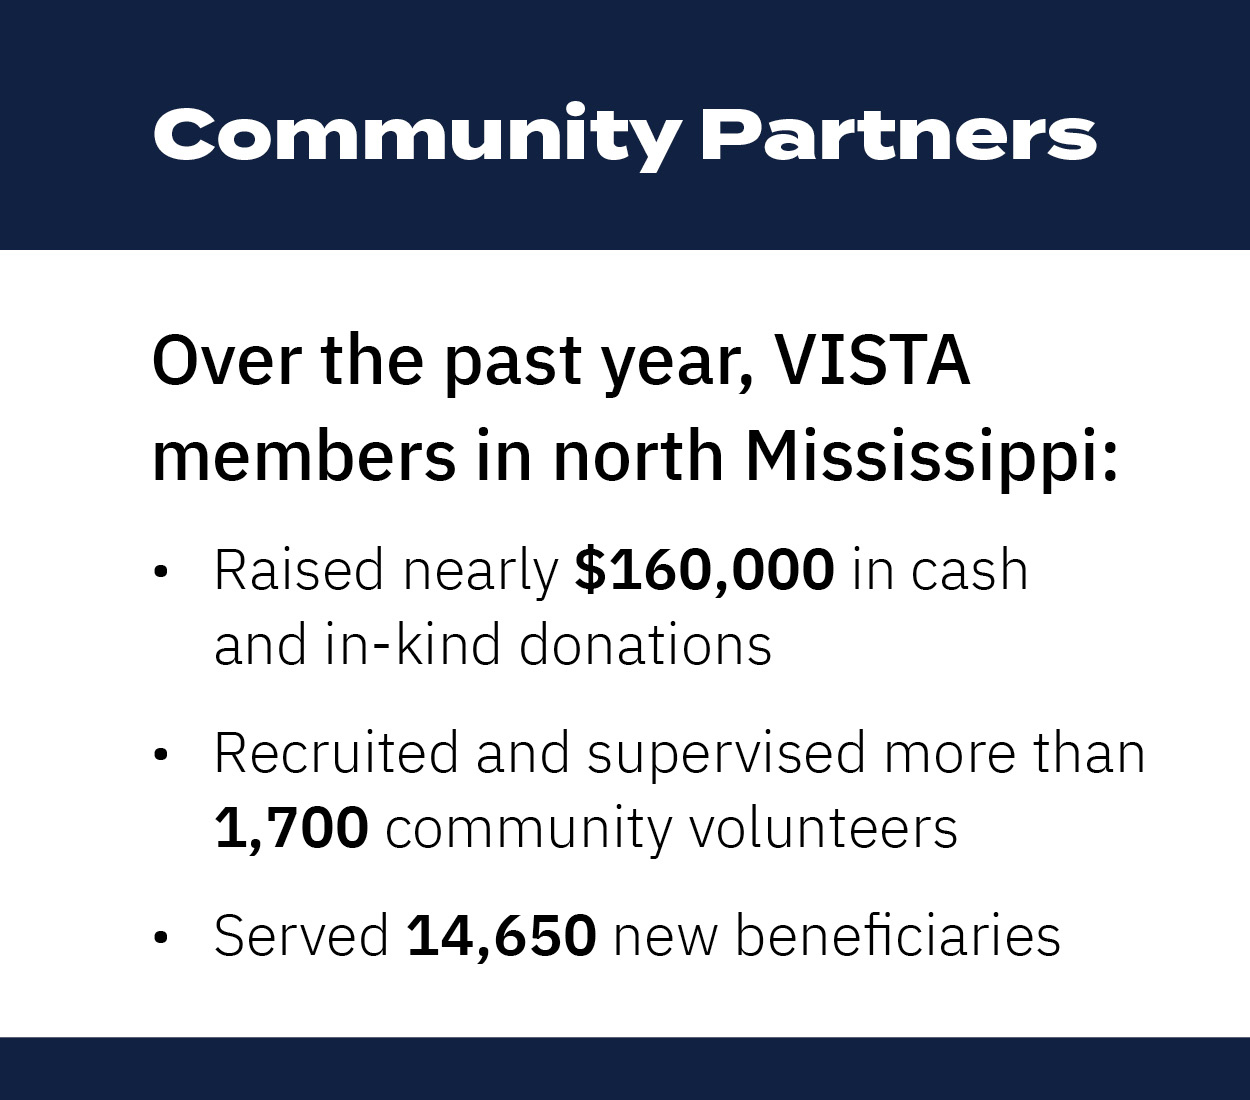 Community Partners infographic